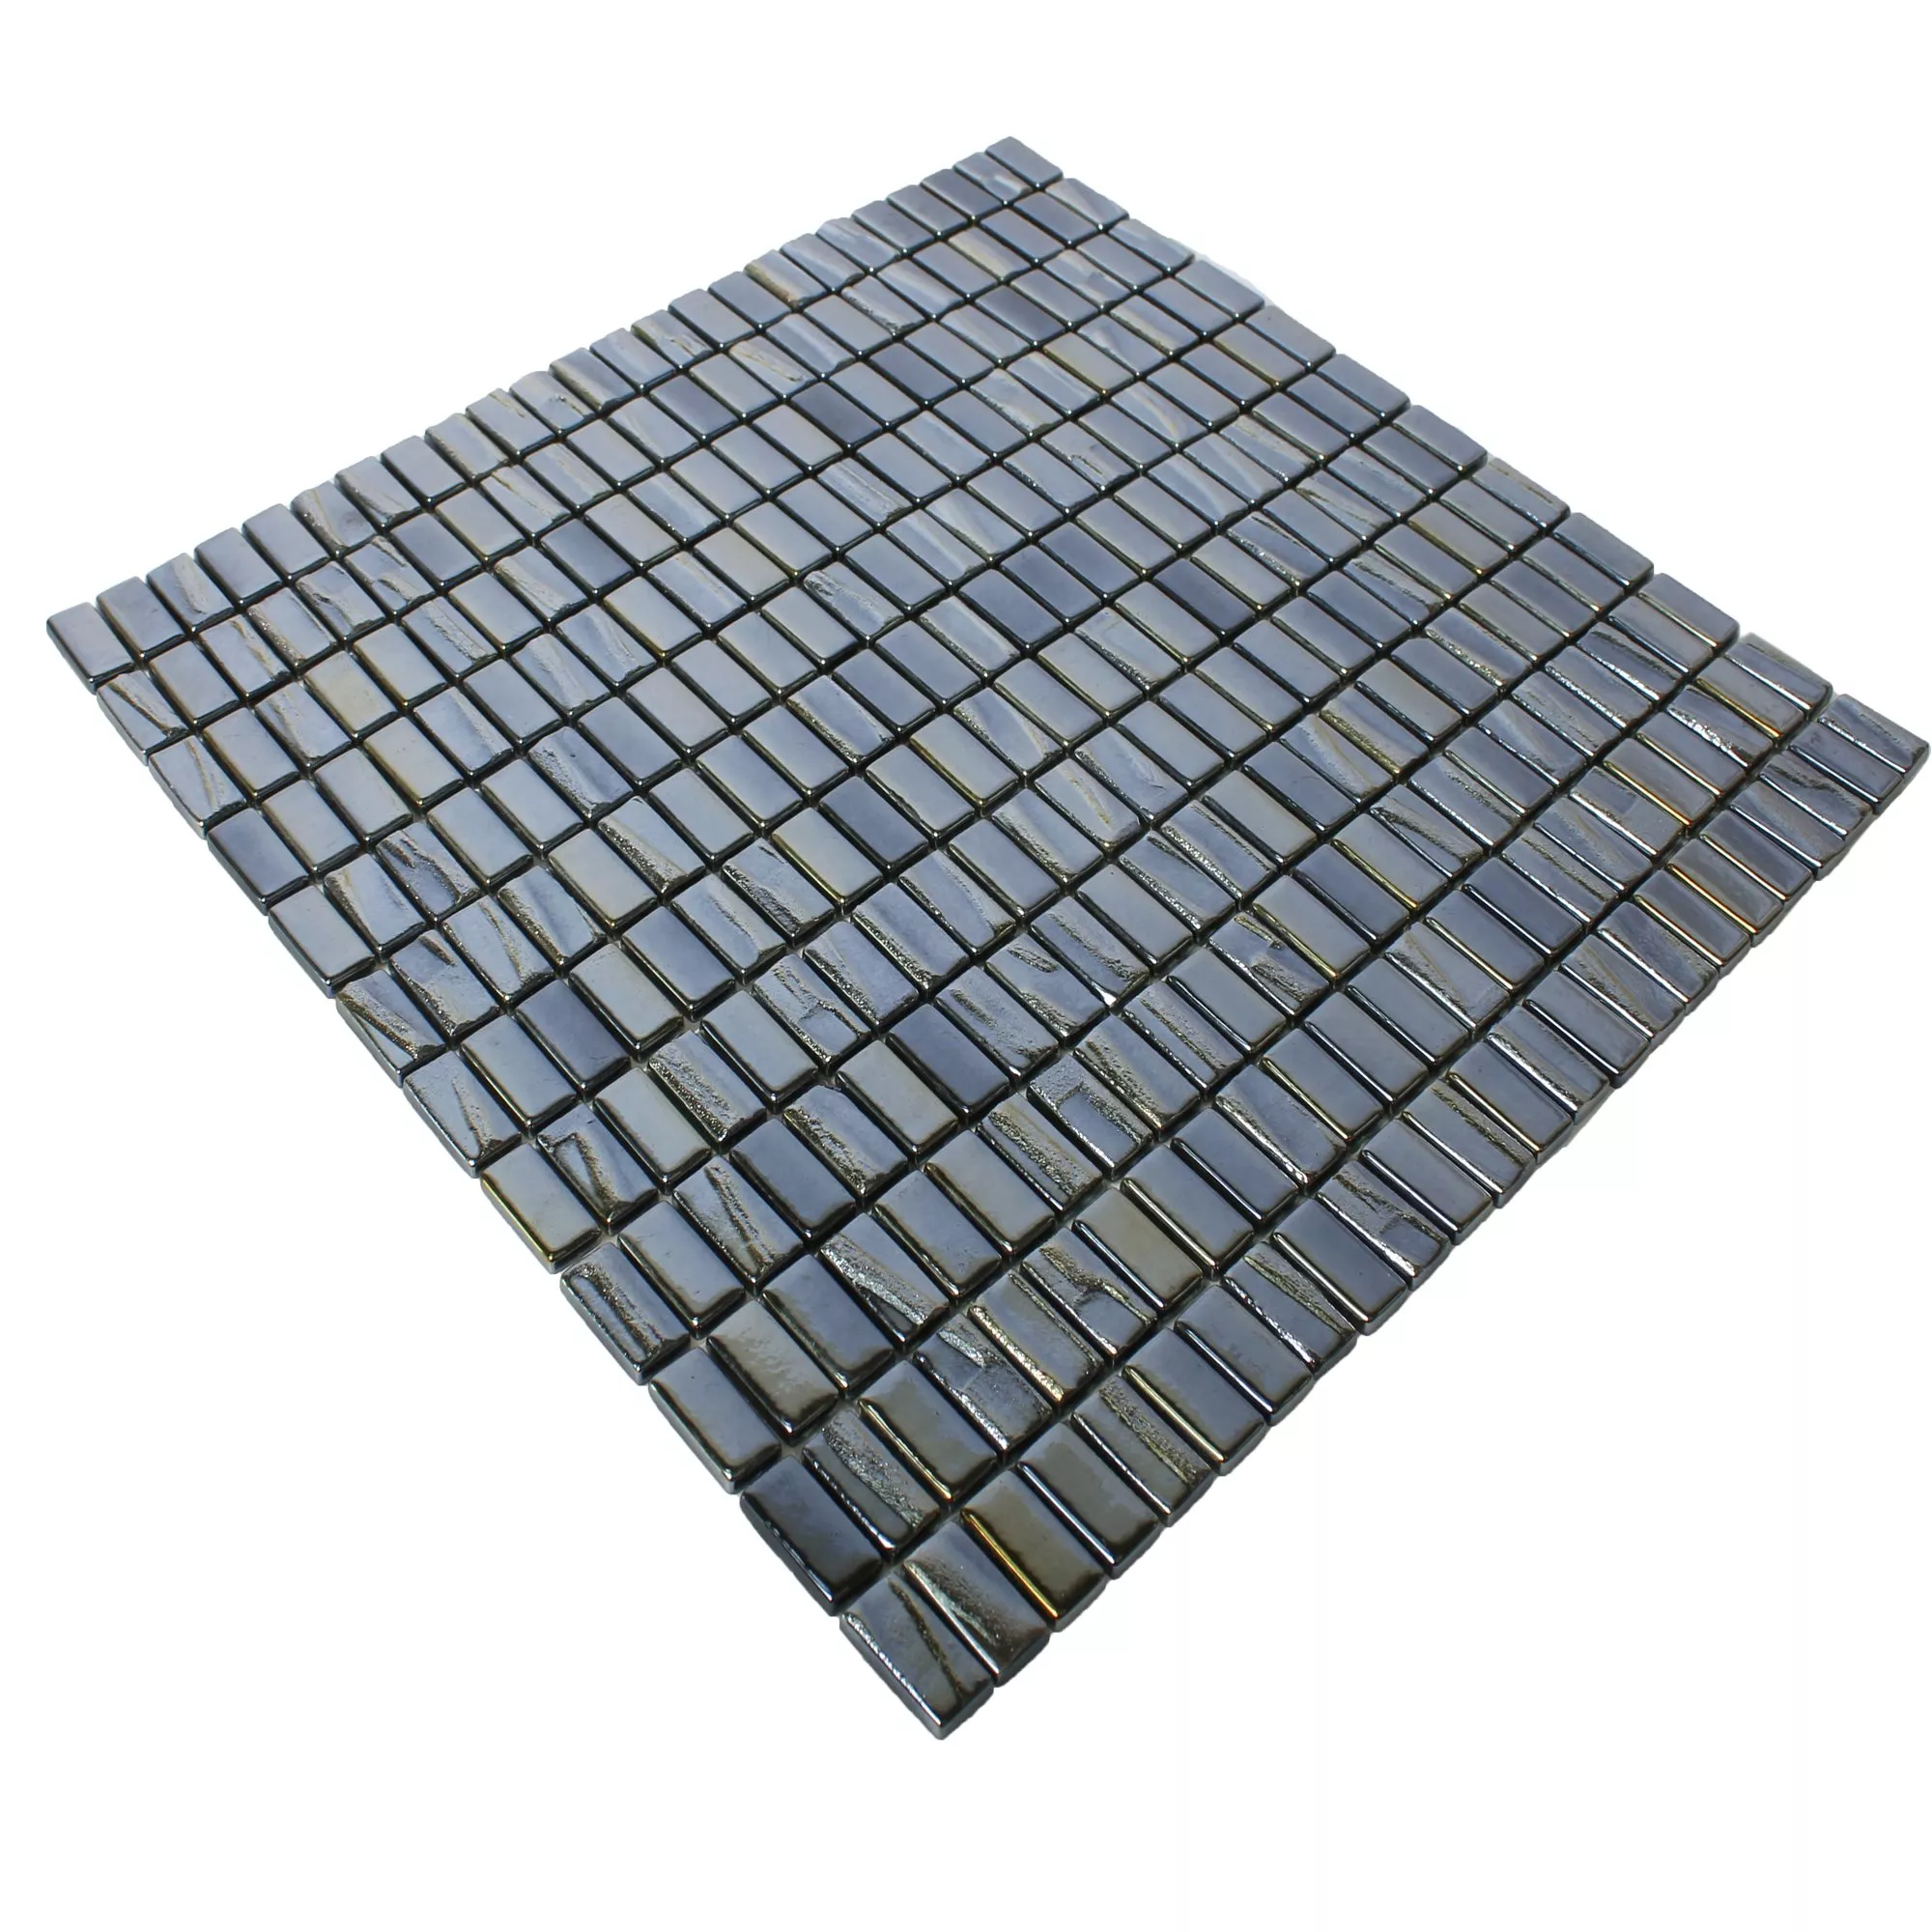 Sample Glasmozaïek Tegels Presley Zwart Metaalic Brick